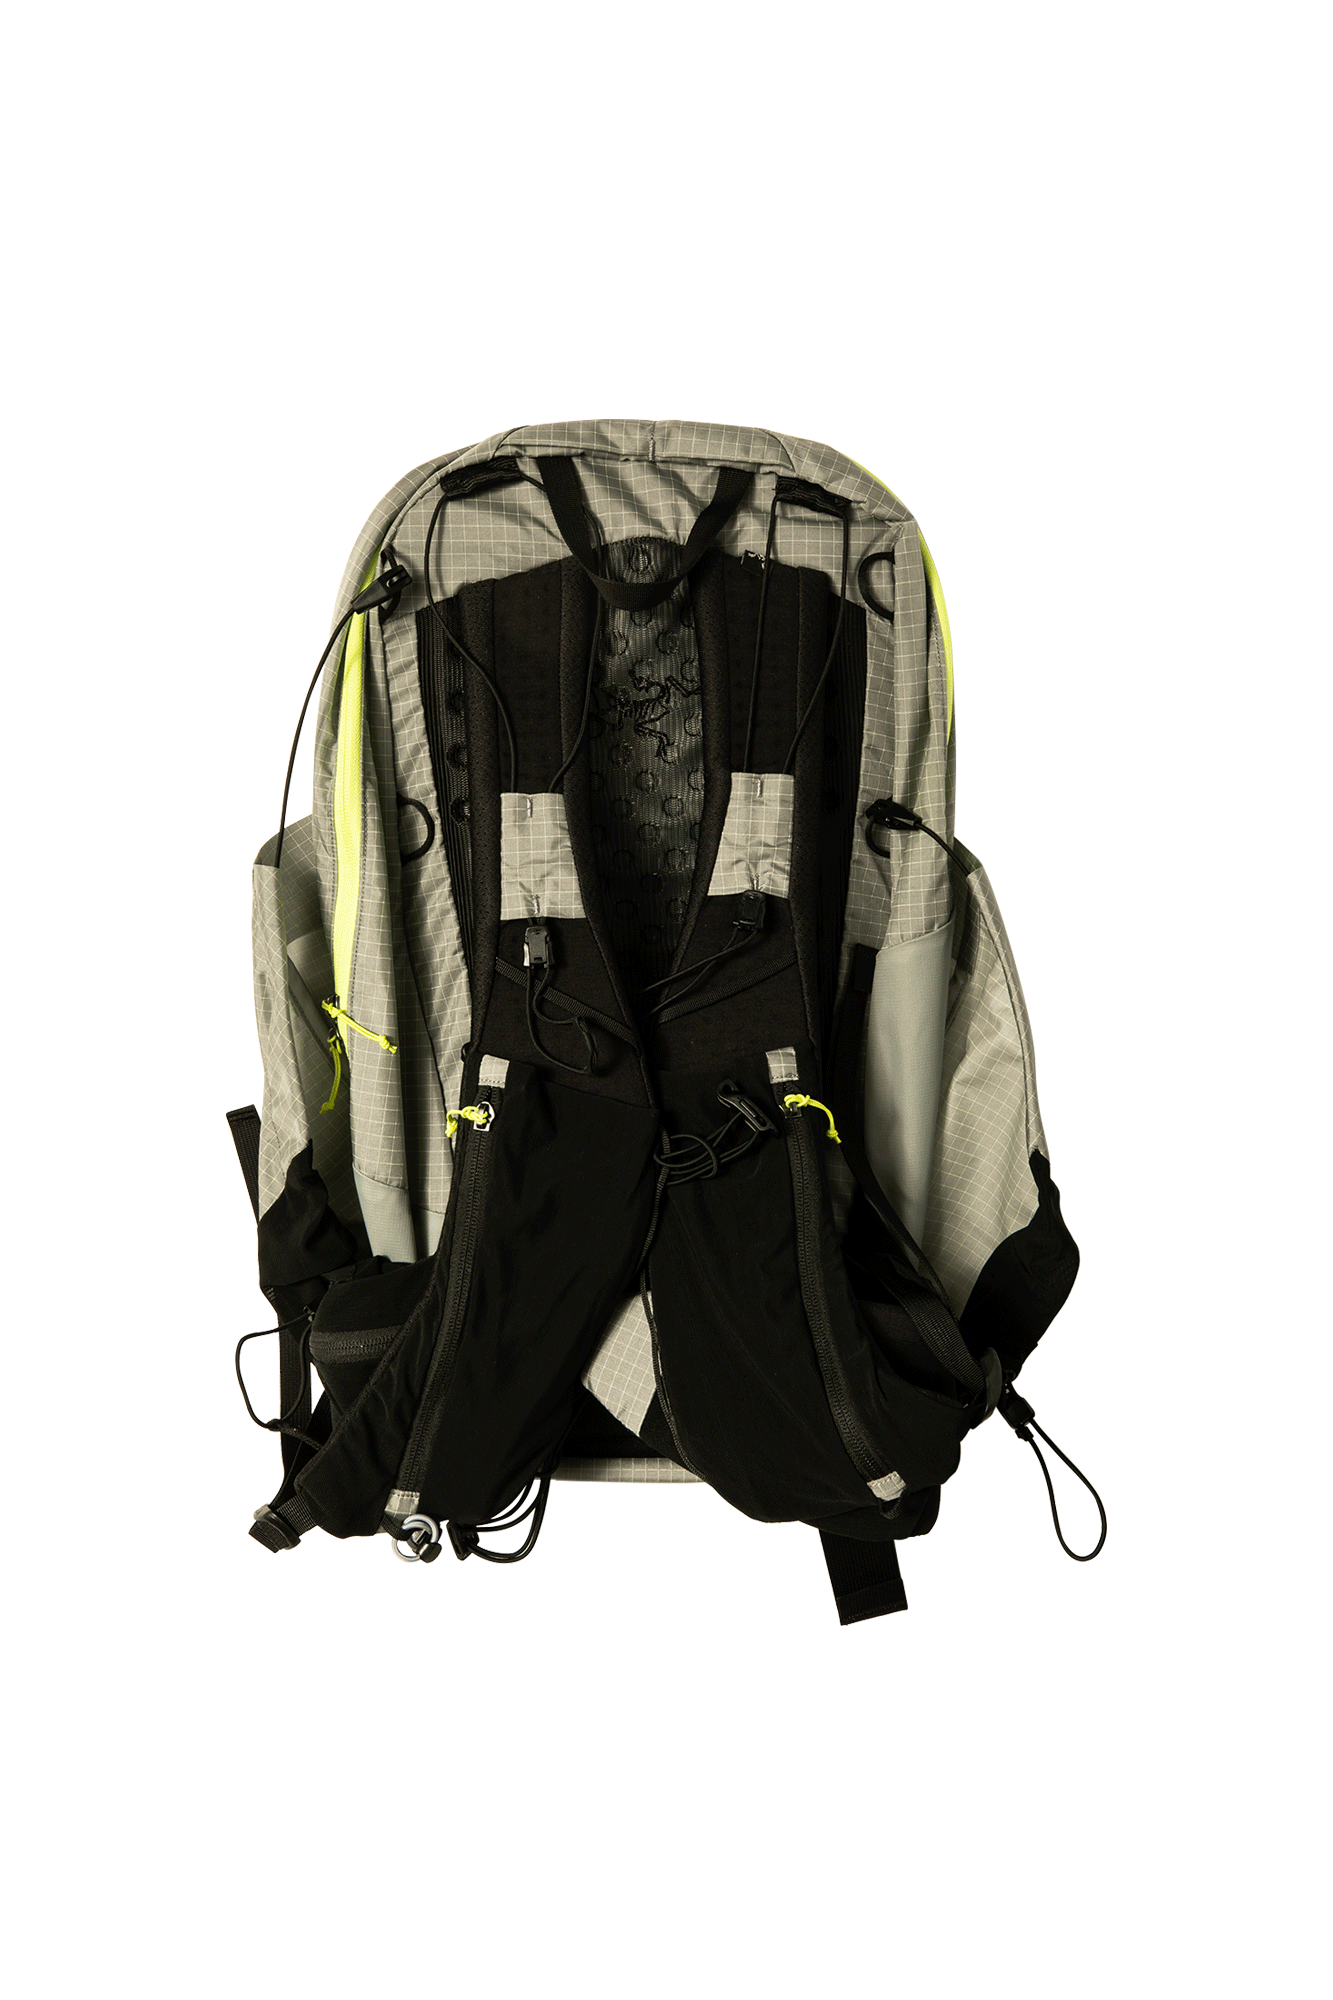 Aerios 30 Backpack